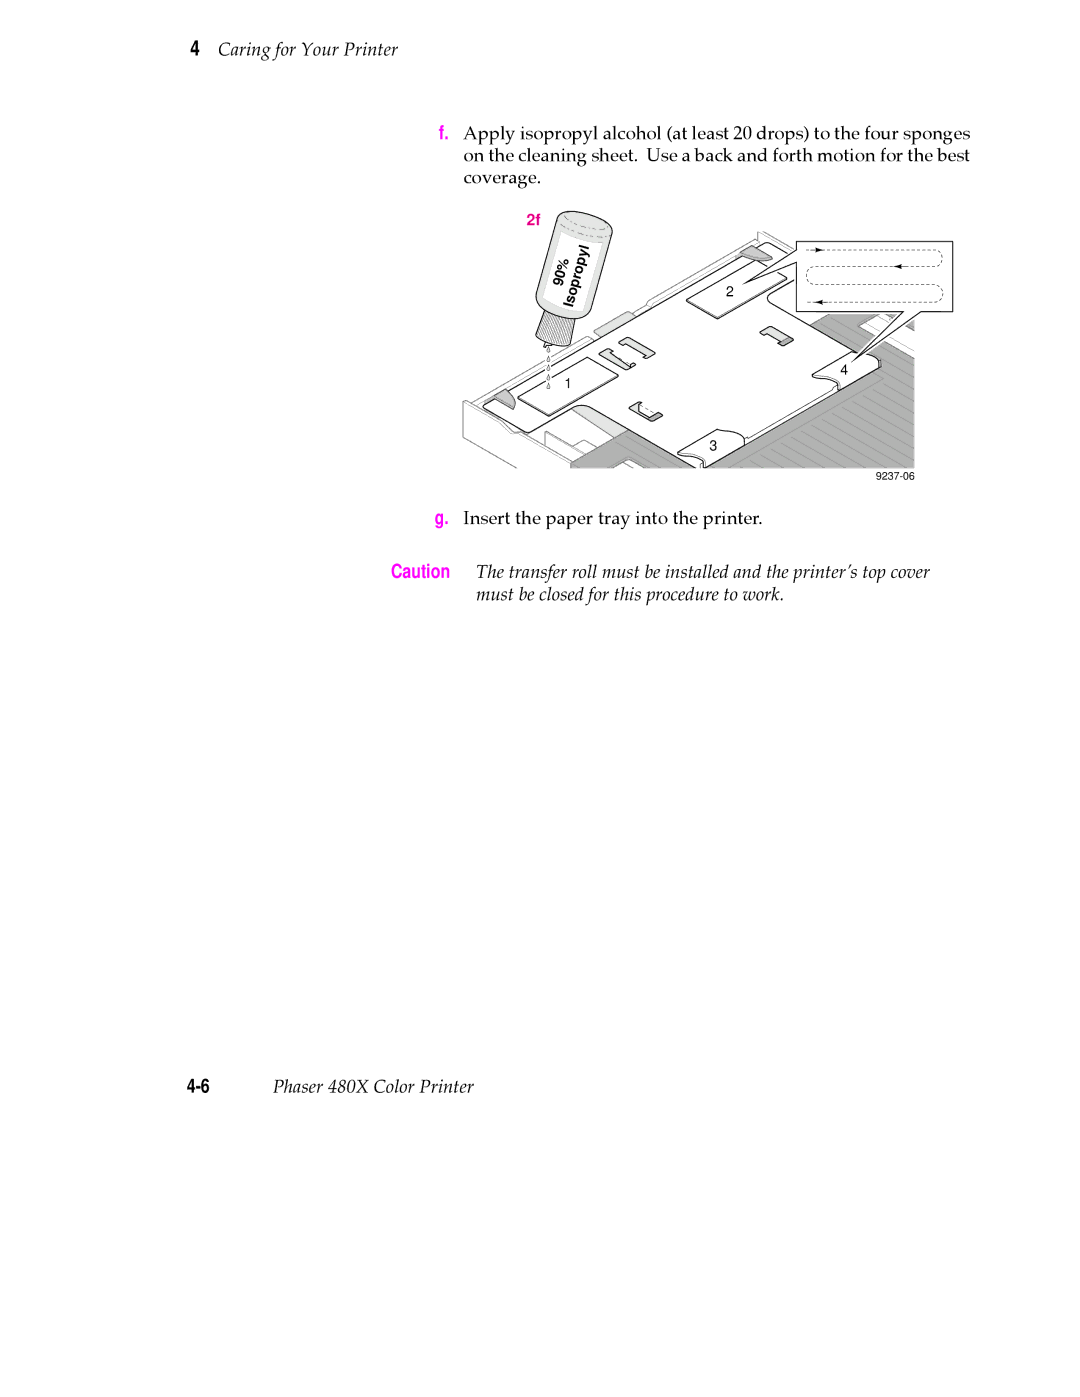 Tektronix 480X user manual Insert the paper tray into the printer 